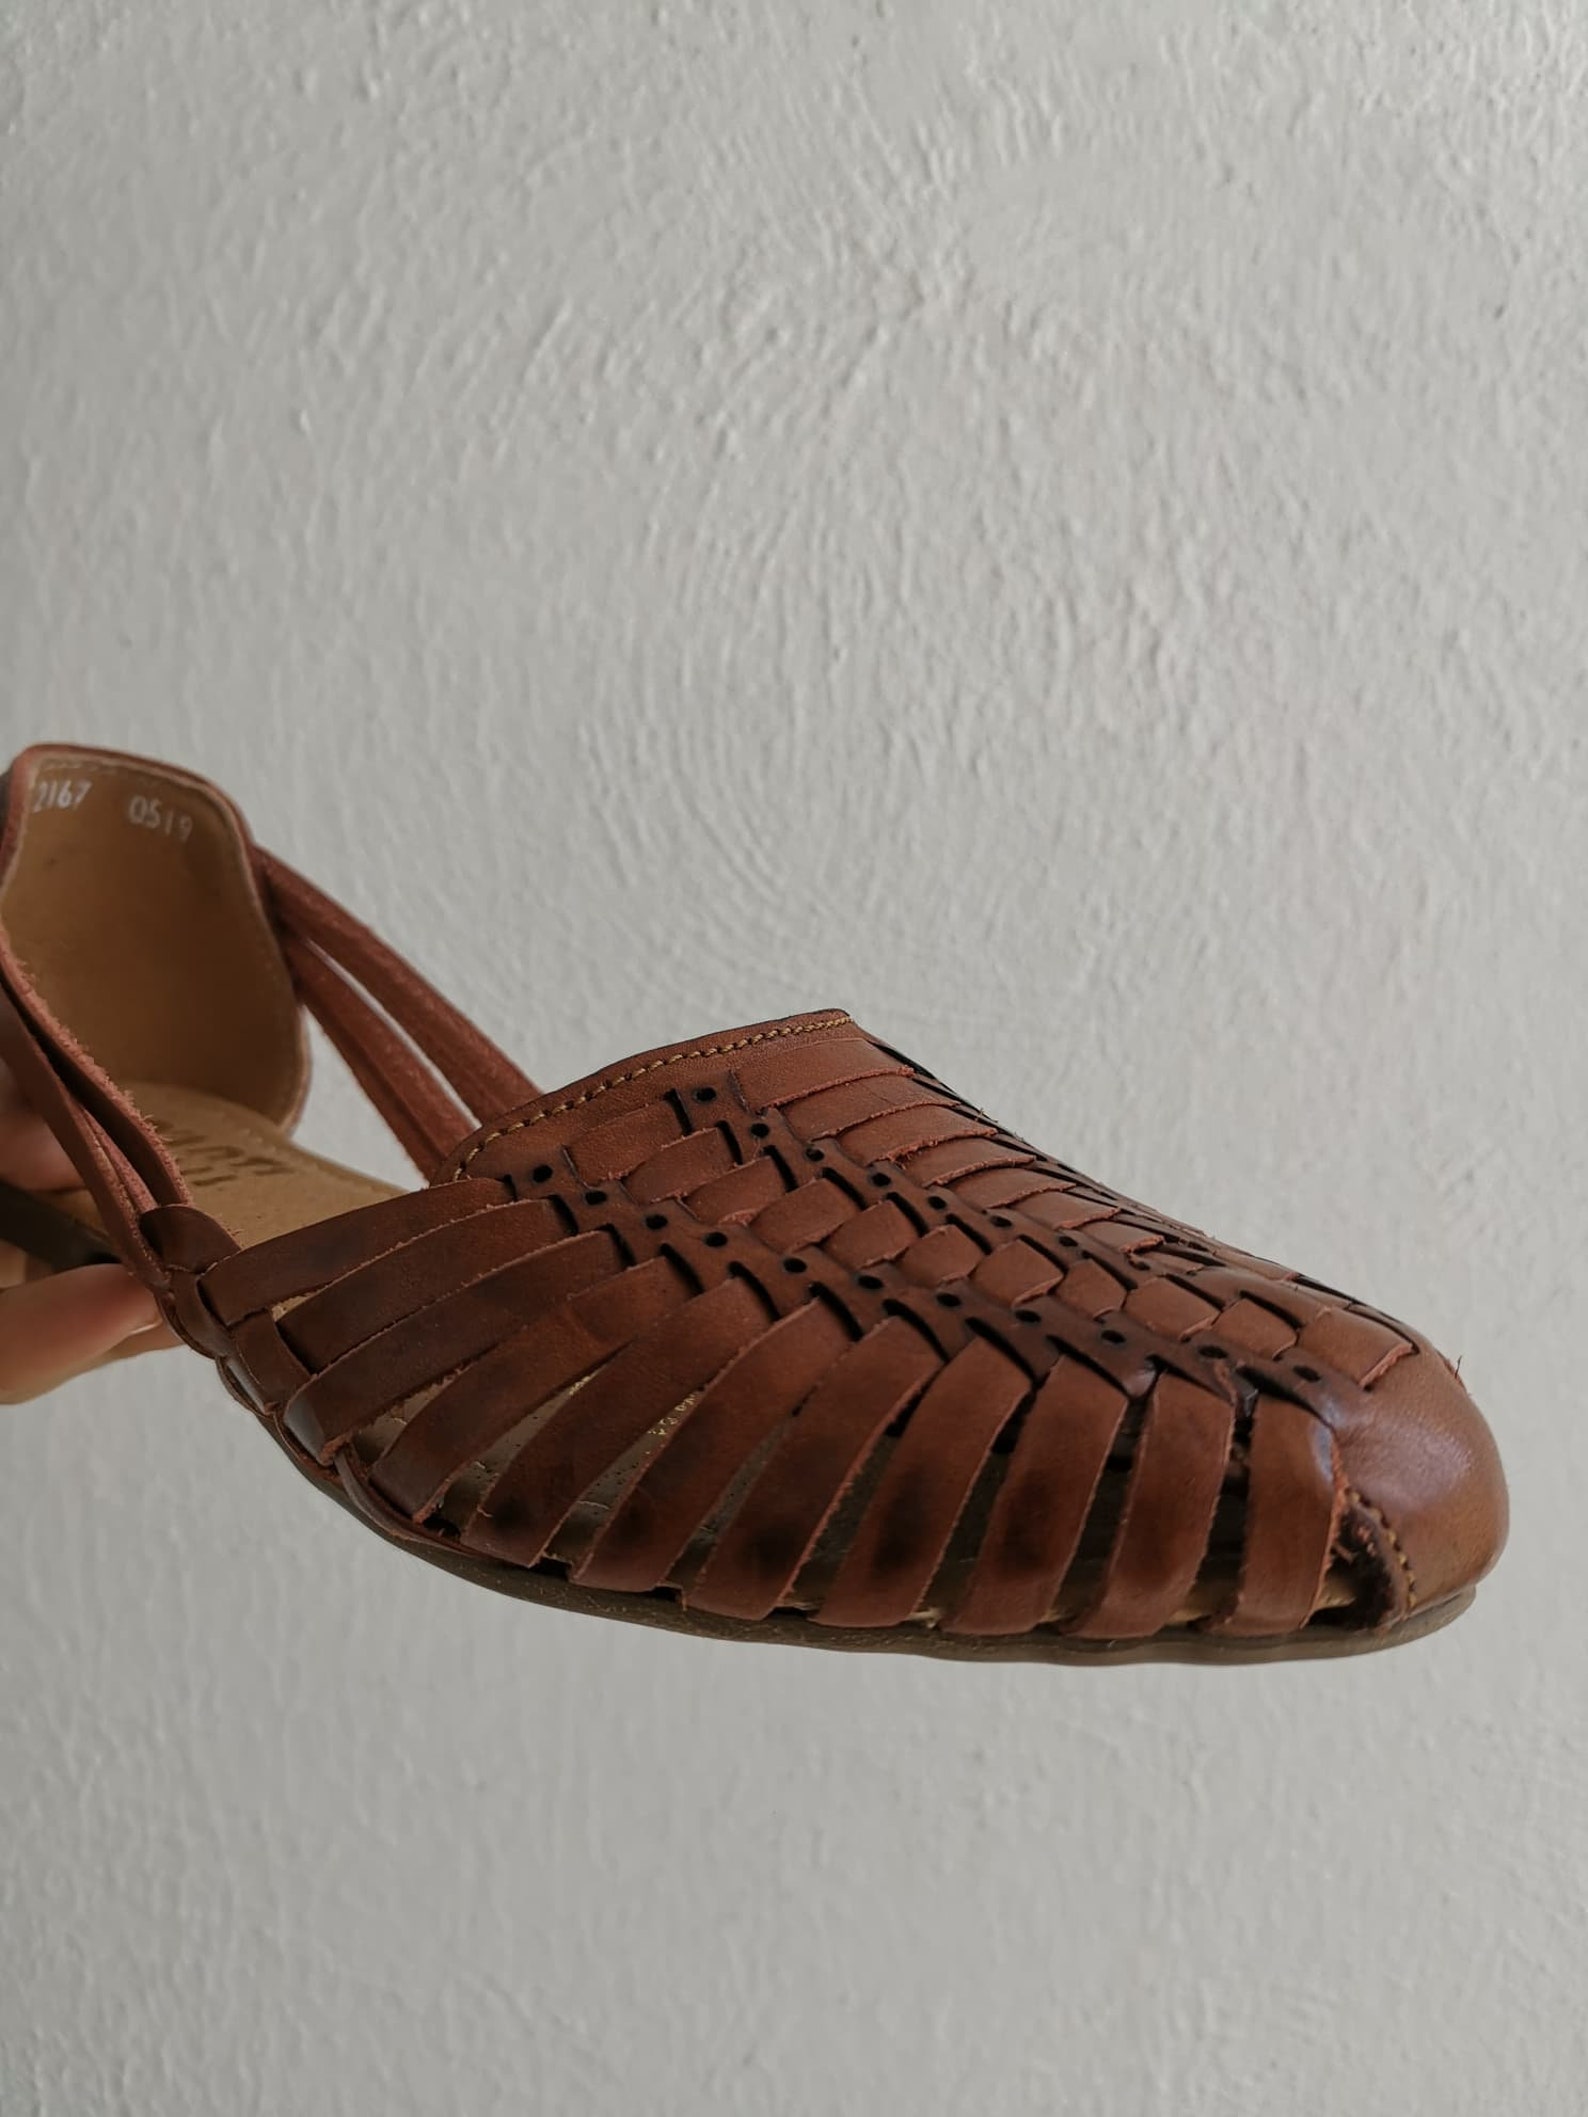 Huarache Sandal All Sizes Boho Hippie Vintage Mexican | Etsy